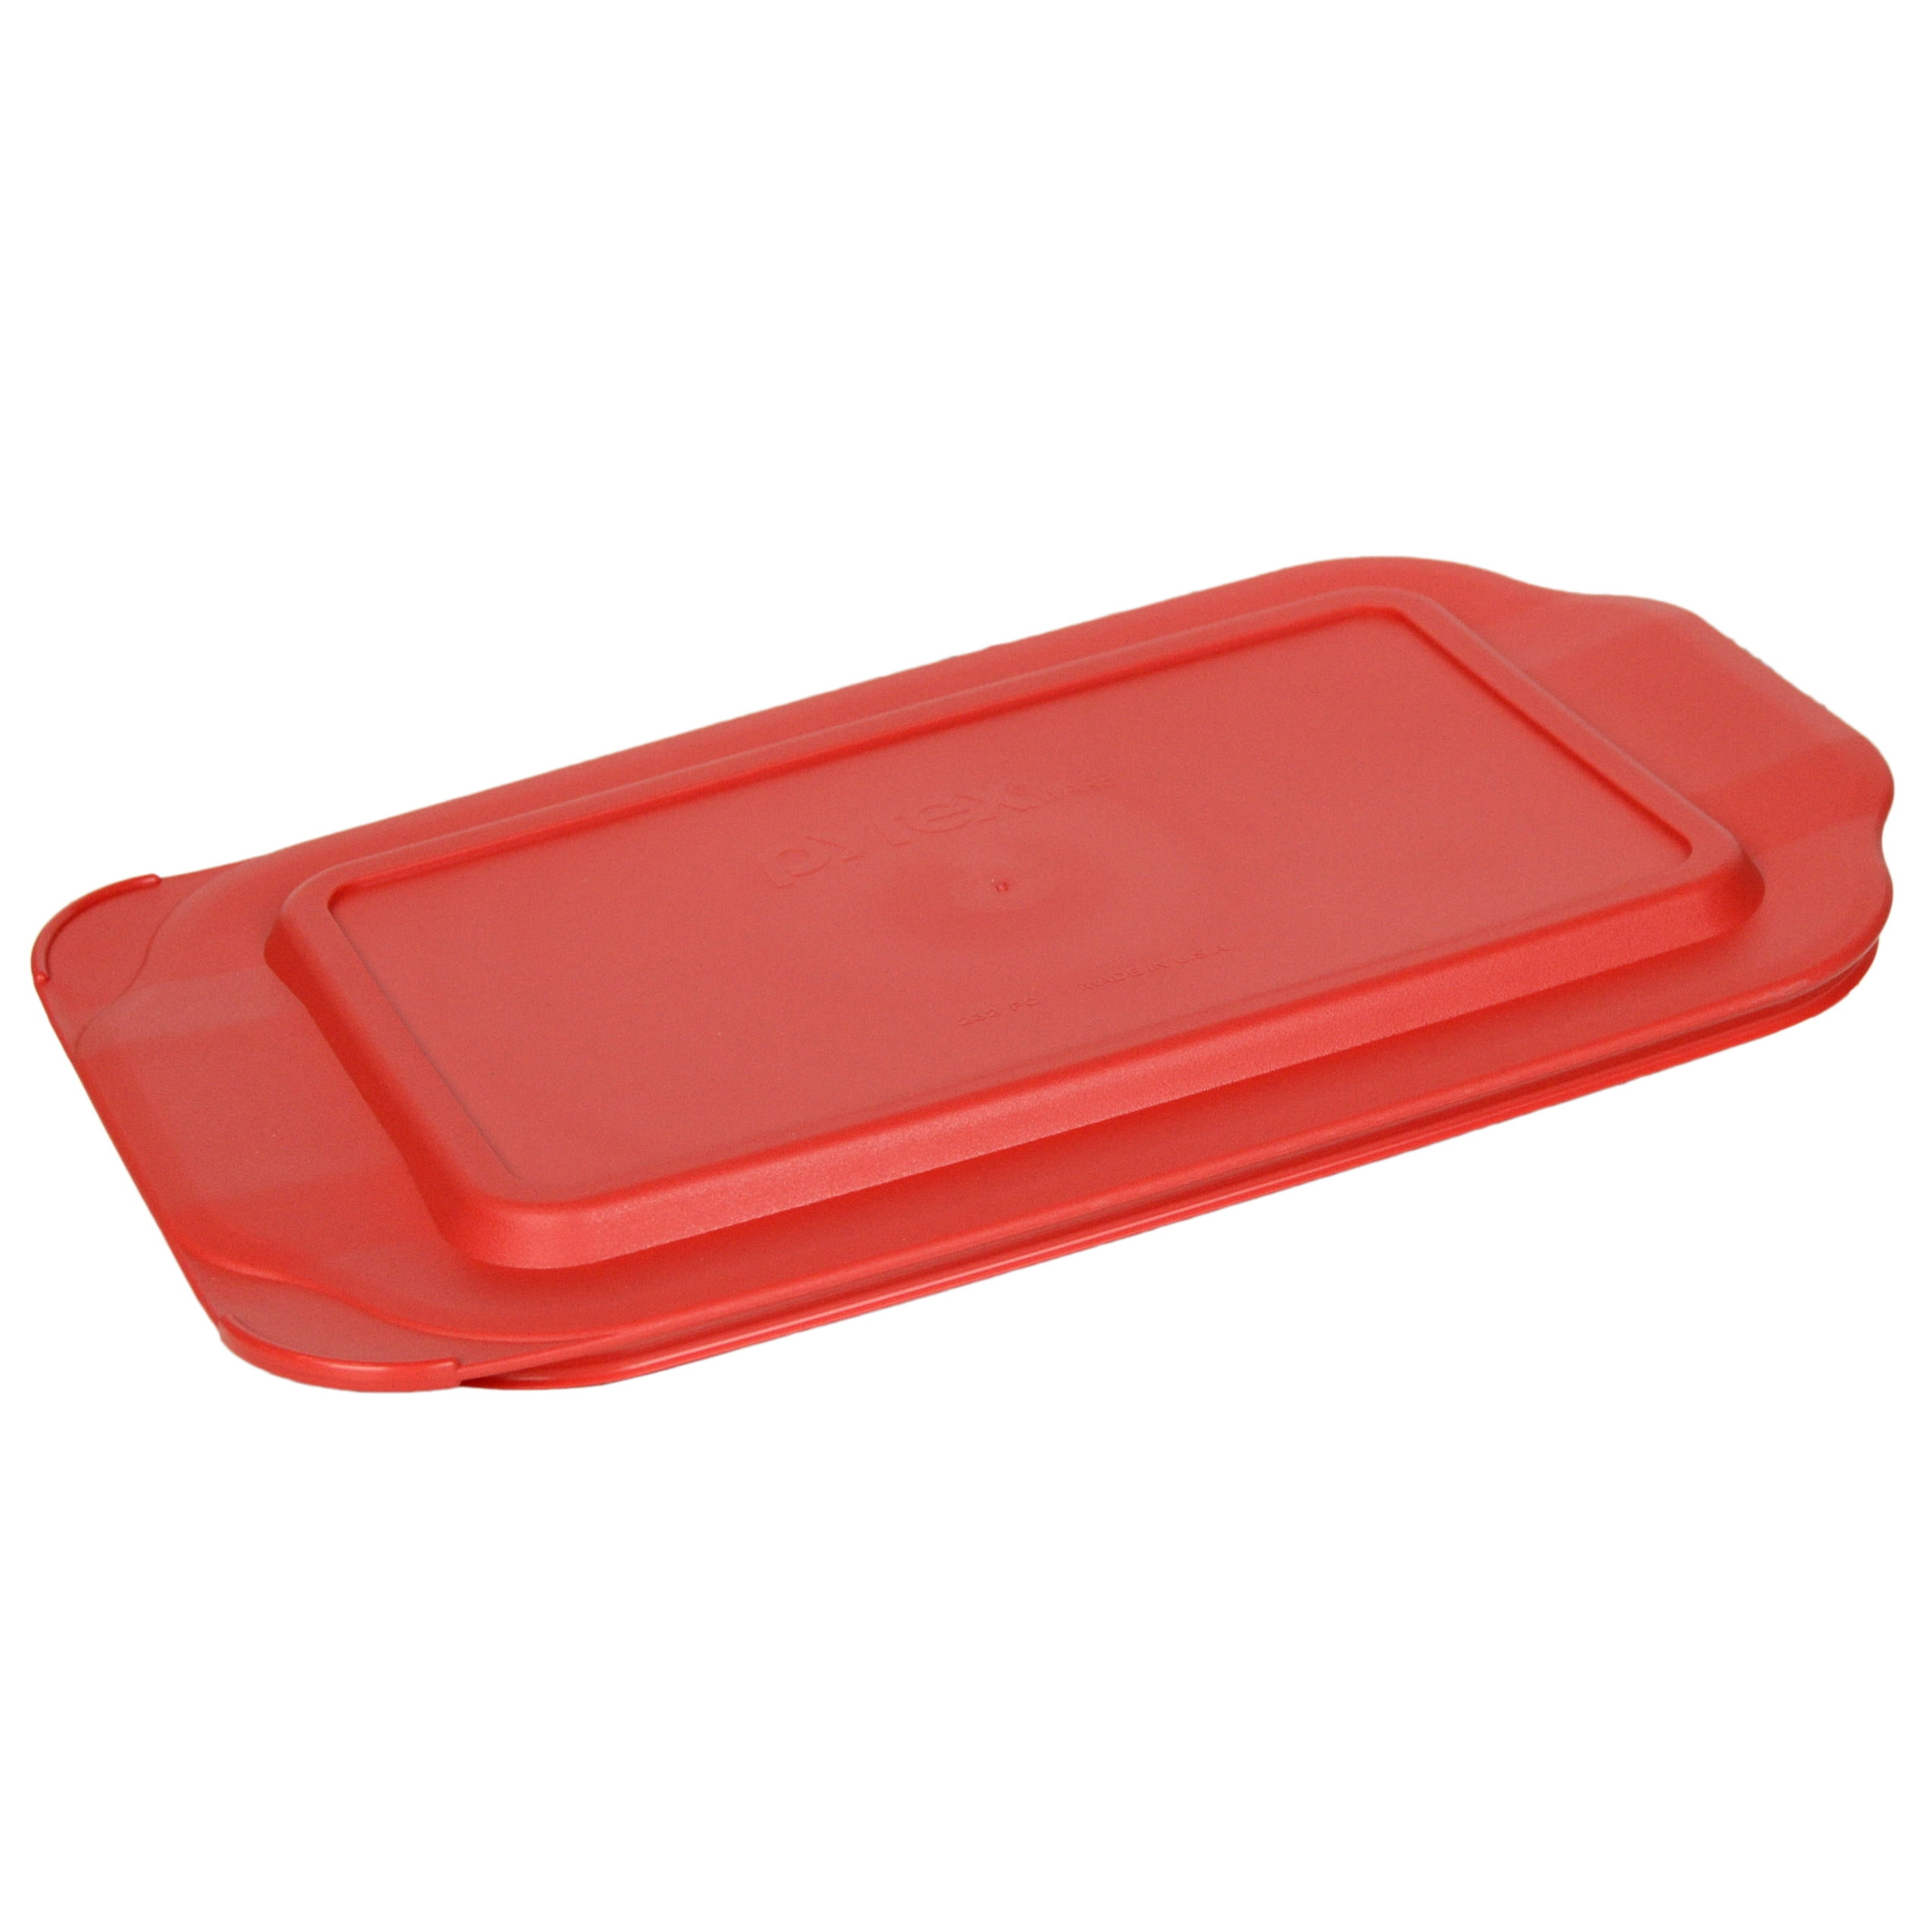 Pyrex (1) 232 2-Quart Rectangle Glass Baking Dish & (1) 232-PC Red